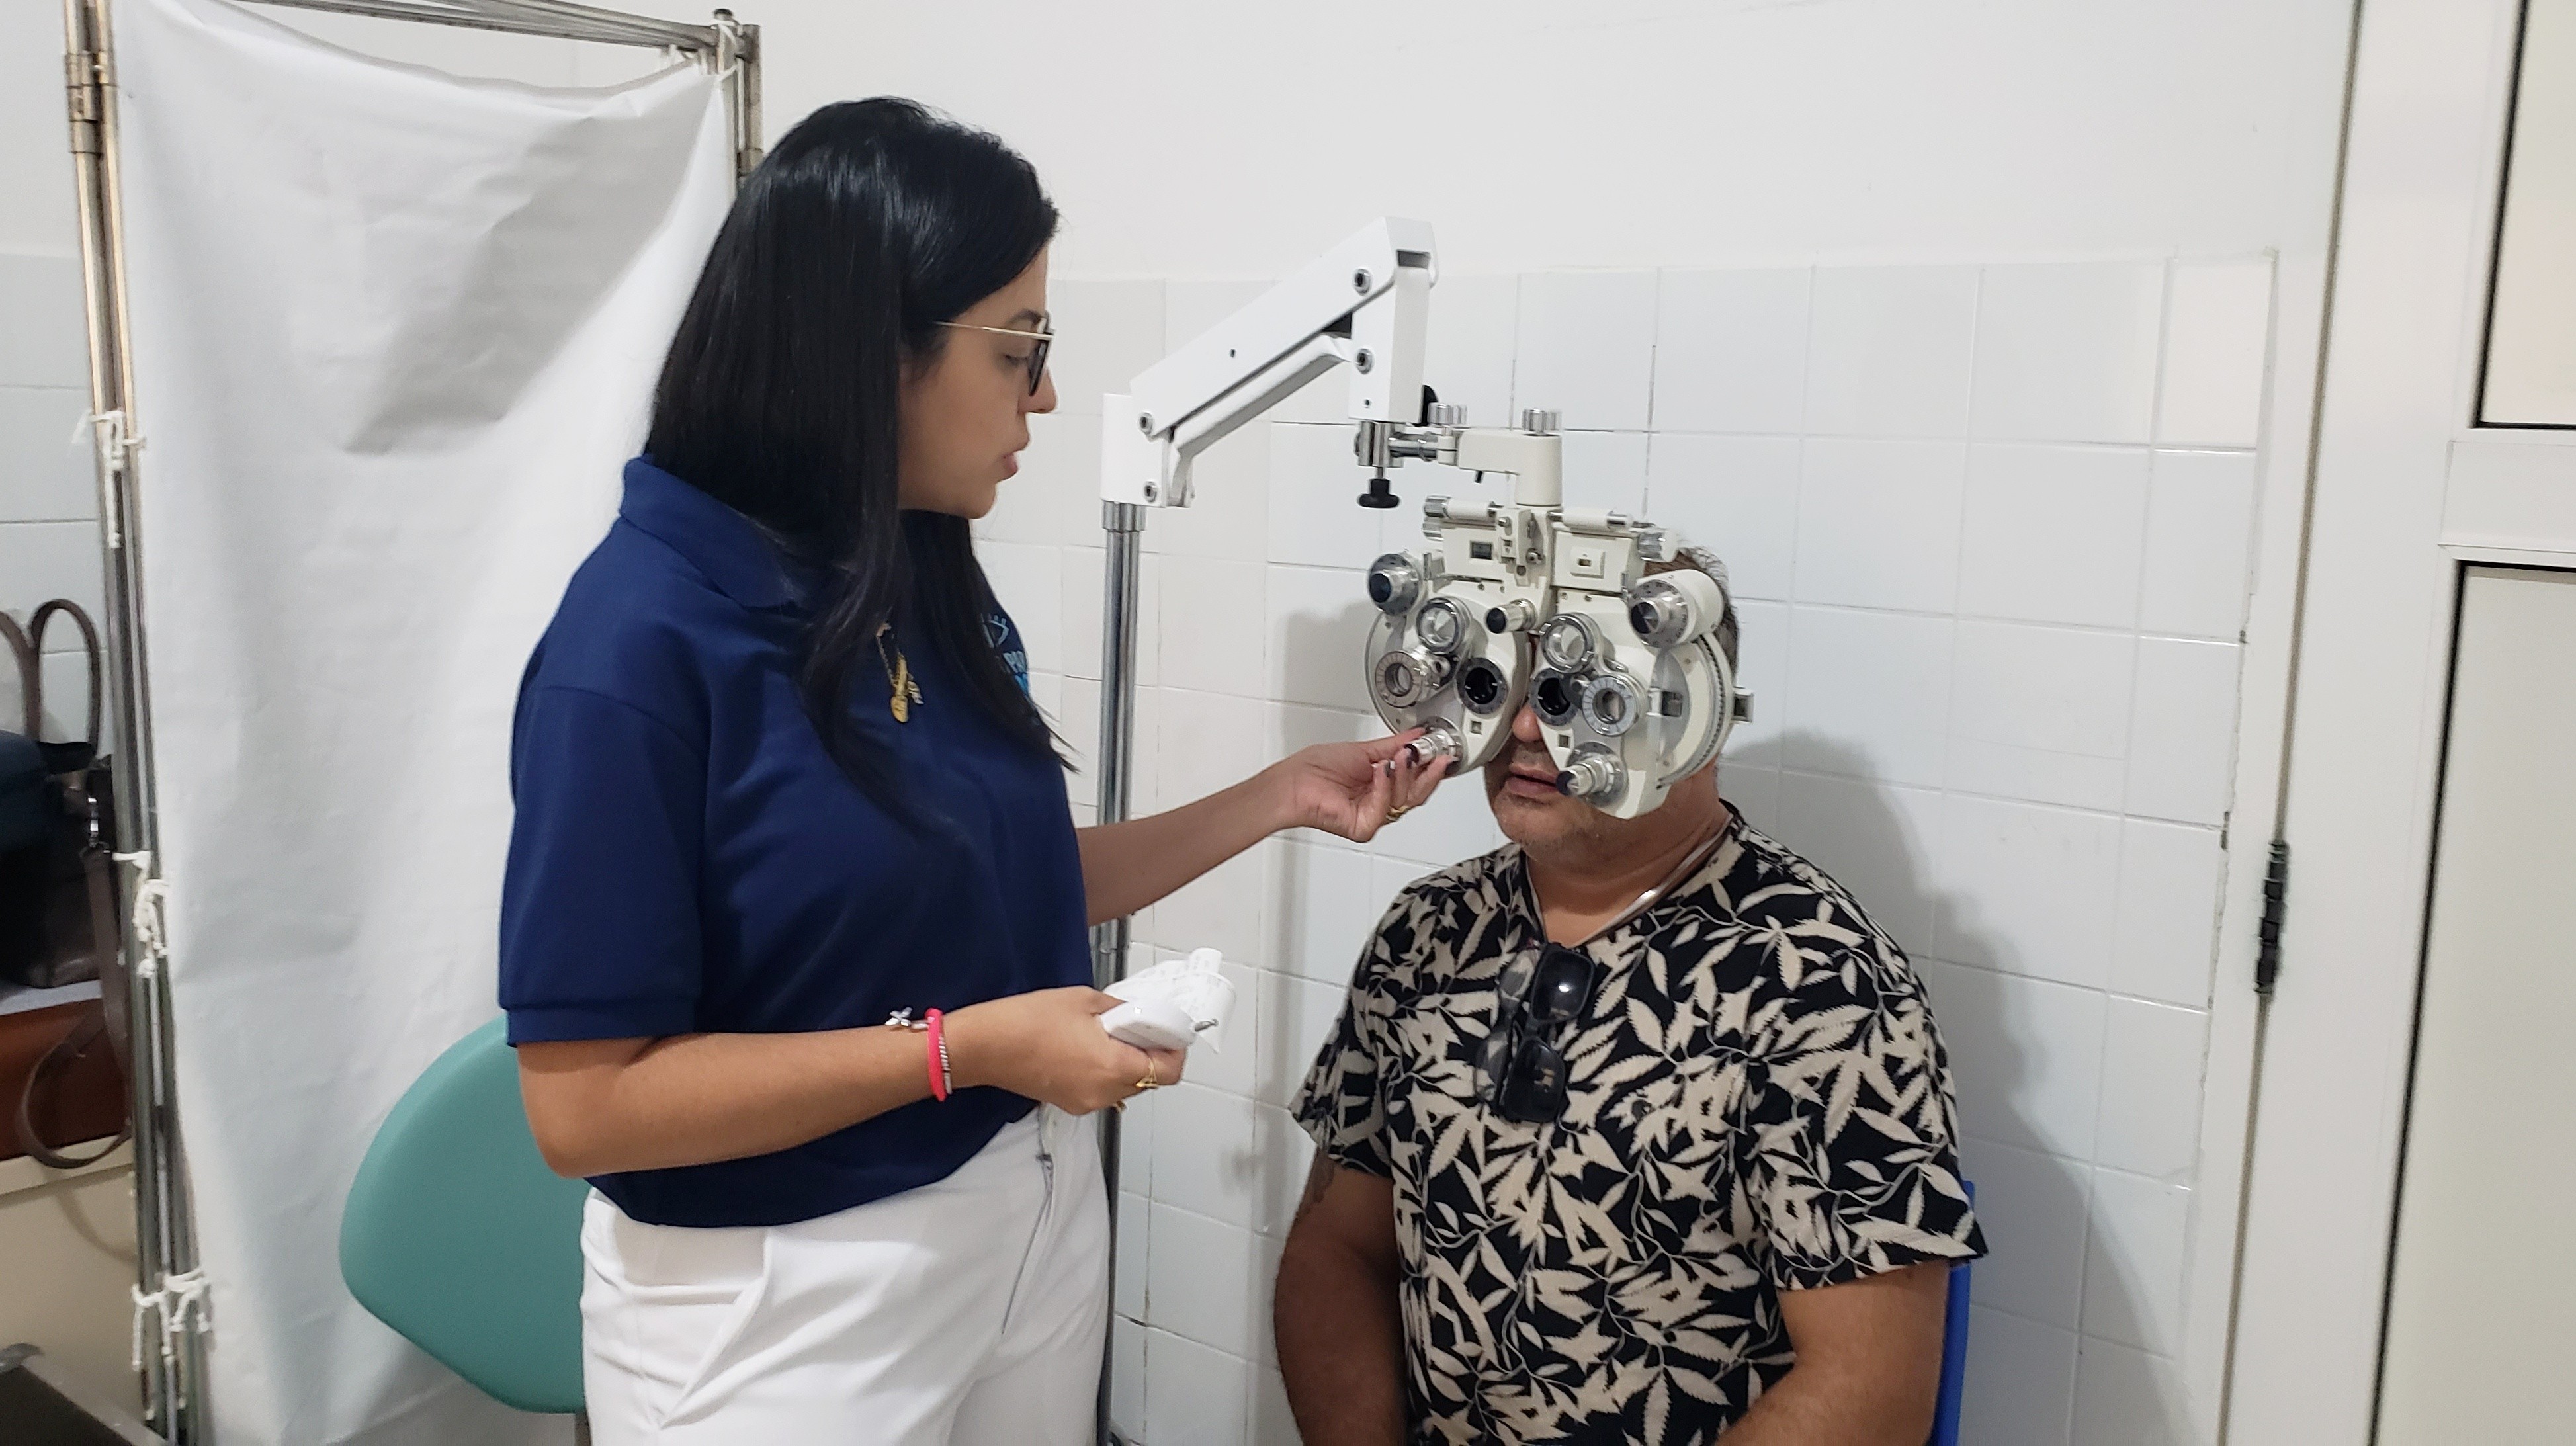 
Moradores de Noronha recebem atendimento oftalmológico gratuito; expectativa dos organizadores é realizar 500 consultas